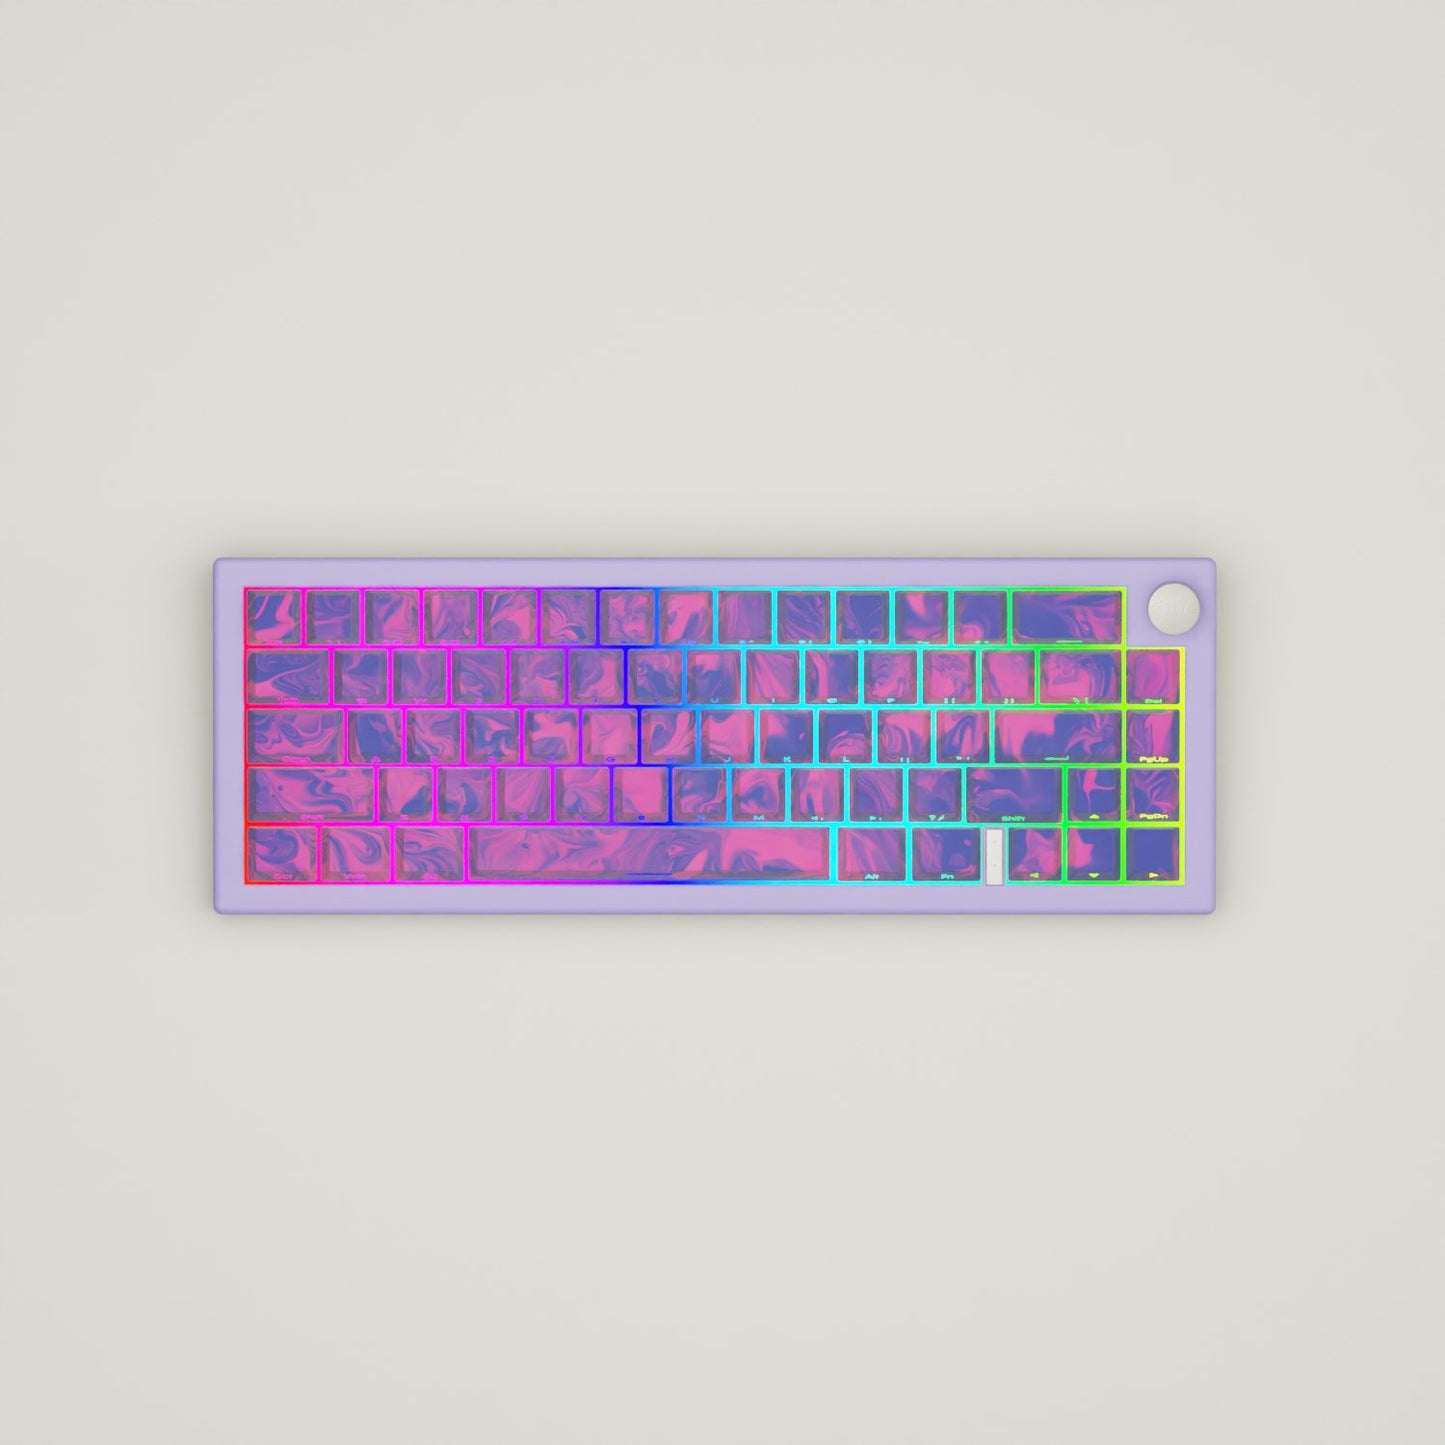 Suminagashi Purple GMK67 Keyboard | Designed By Funny Bunny - Goblintechkeys